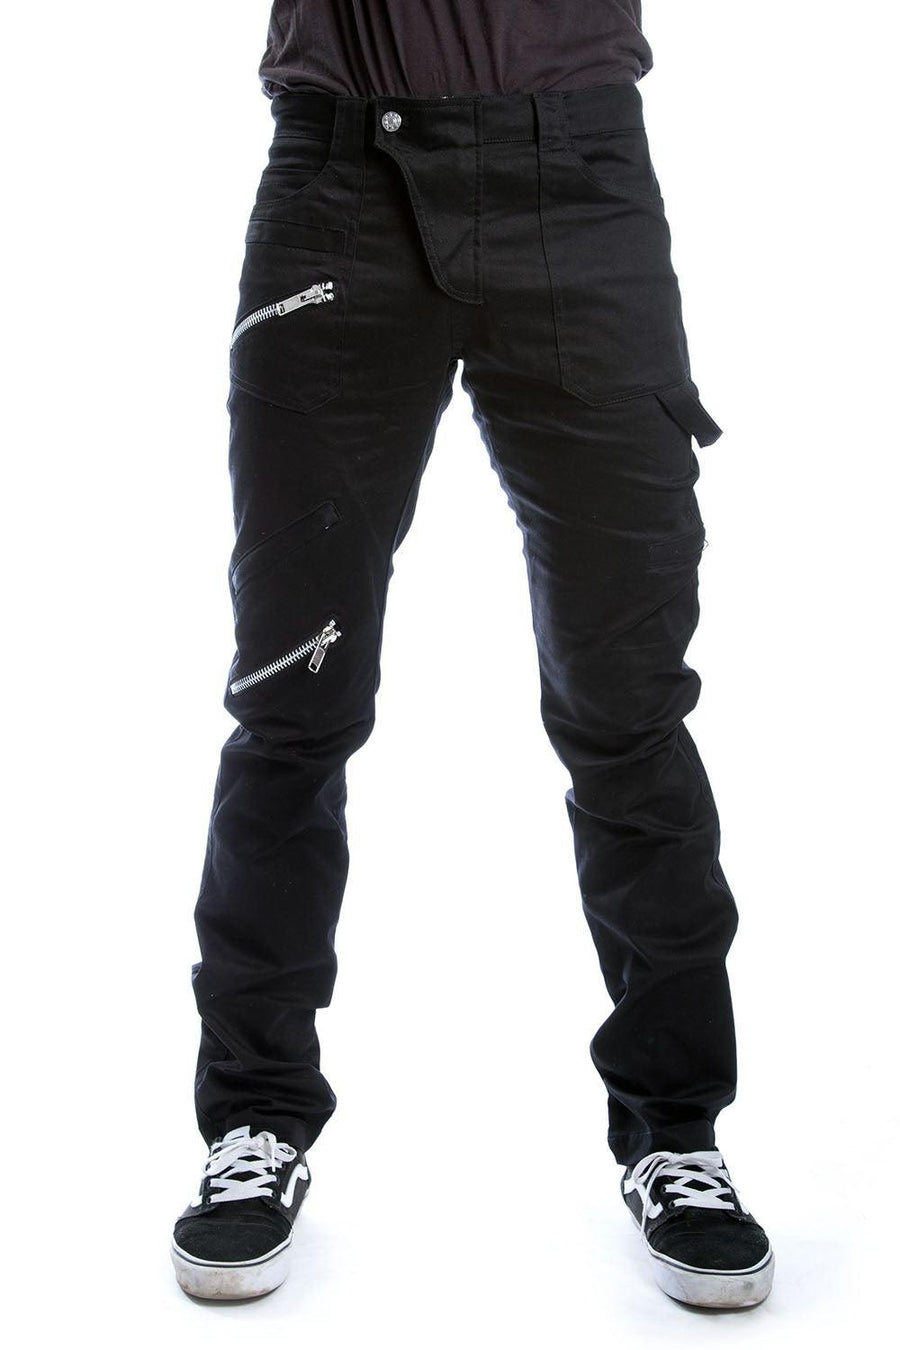 mens black skater jeans pants